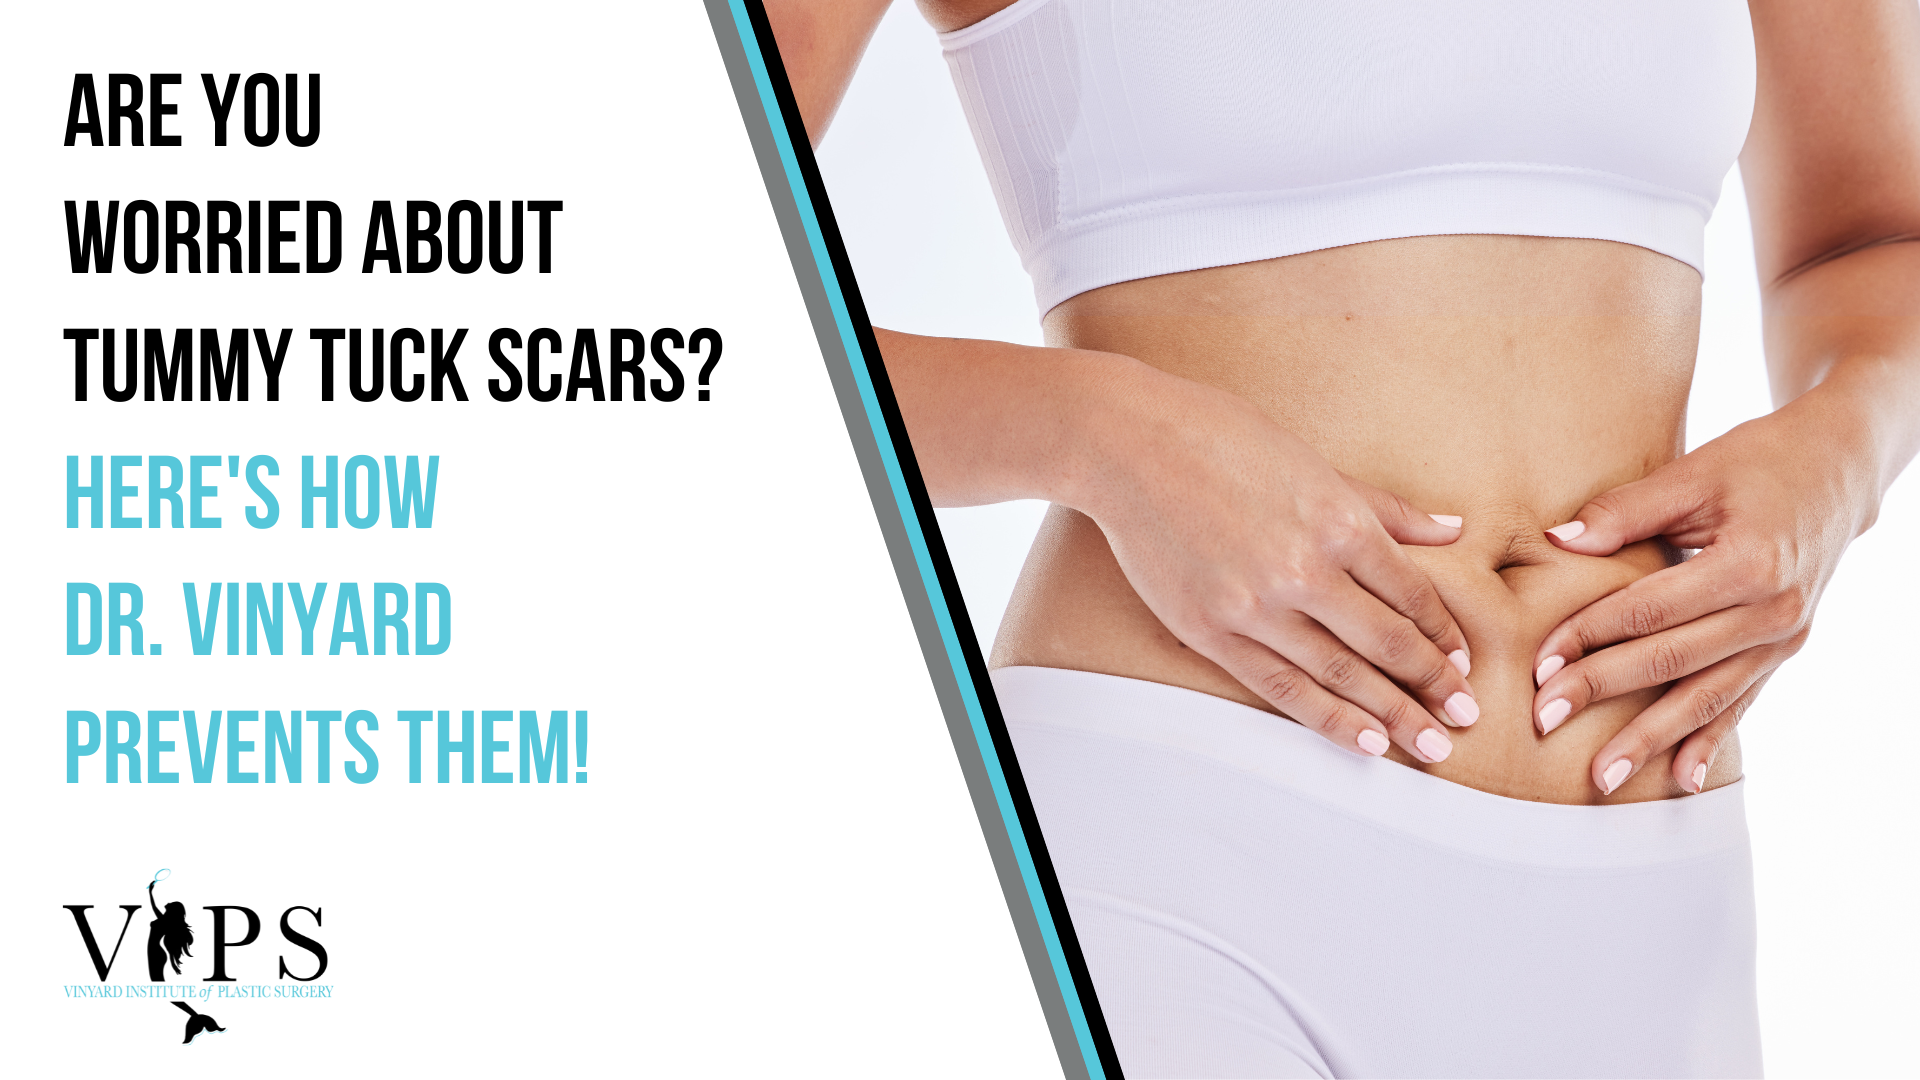 Will I have Tummy Tuck Scars?